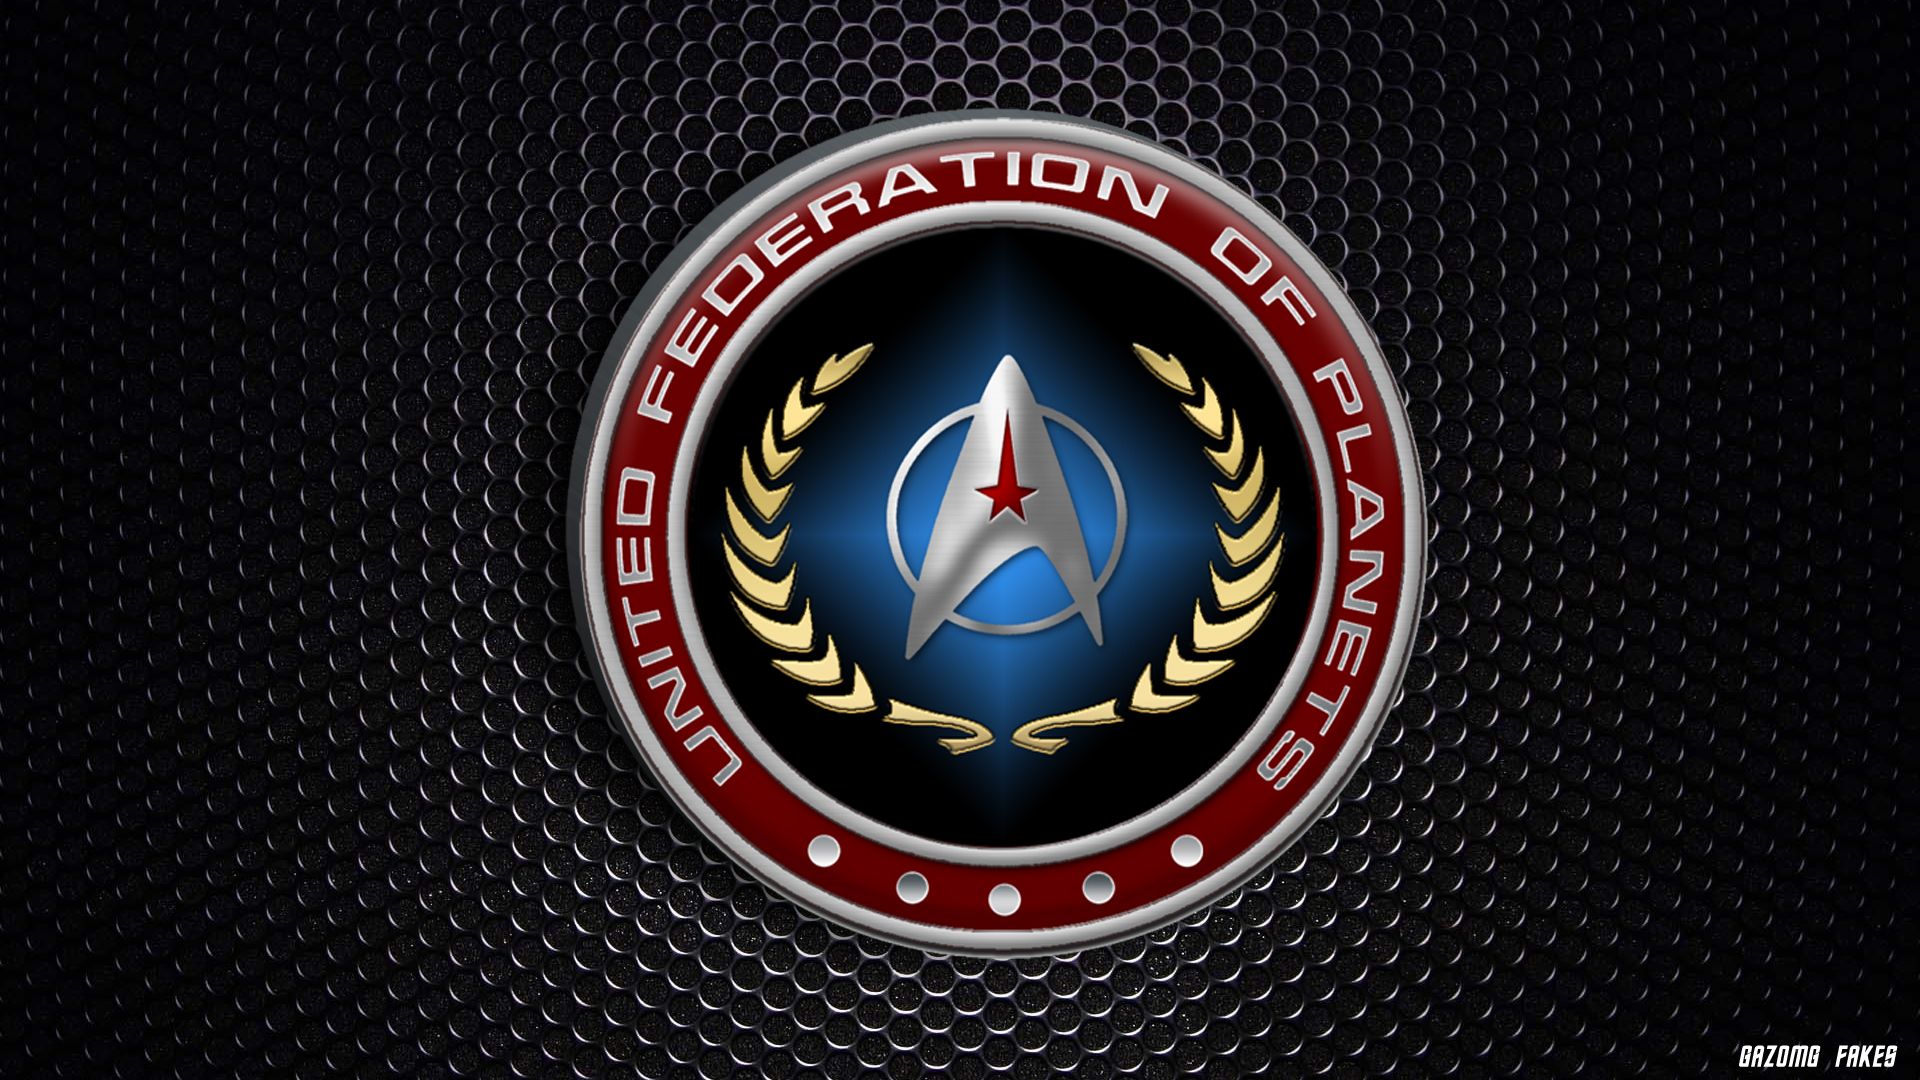 United Federation of Planets logo Starfleet. Star trek art, Star trek artwork, Star trek wallpaper